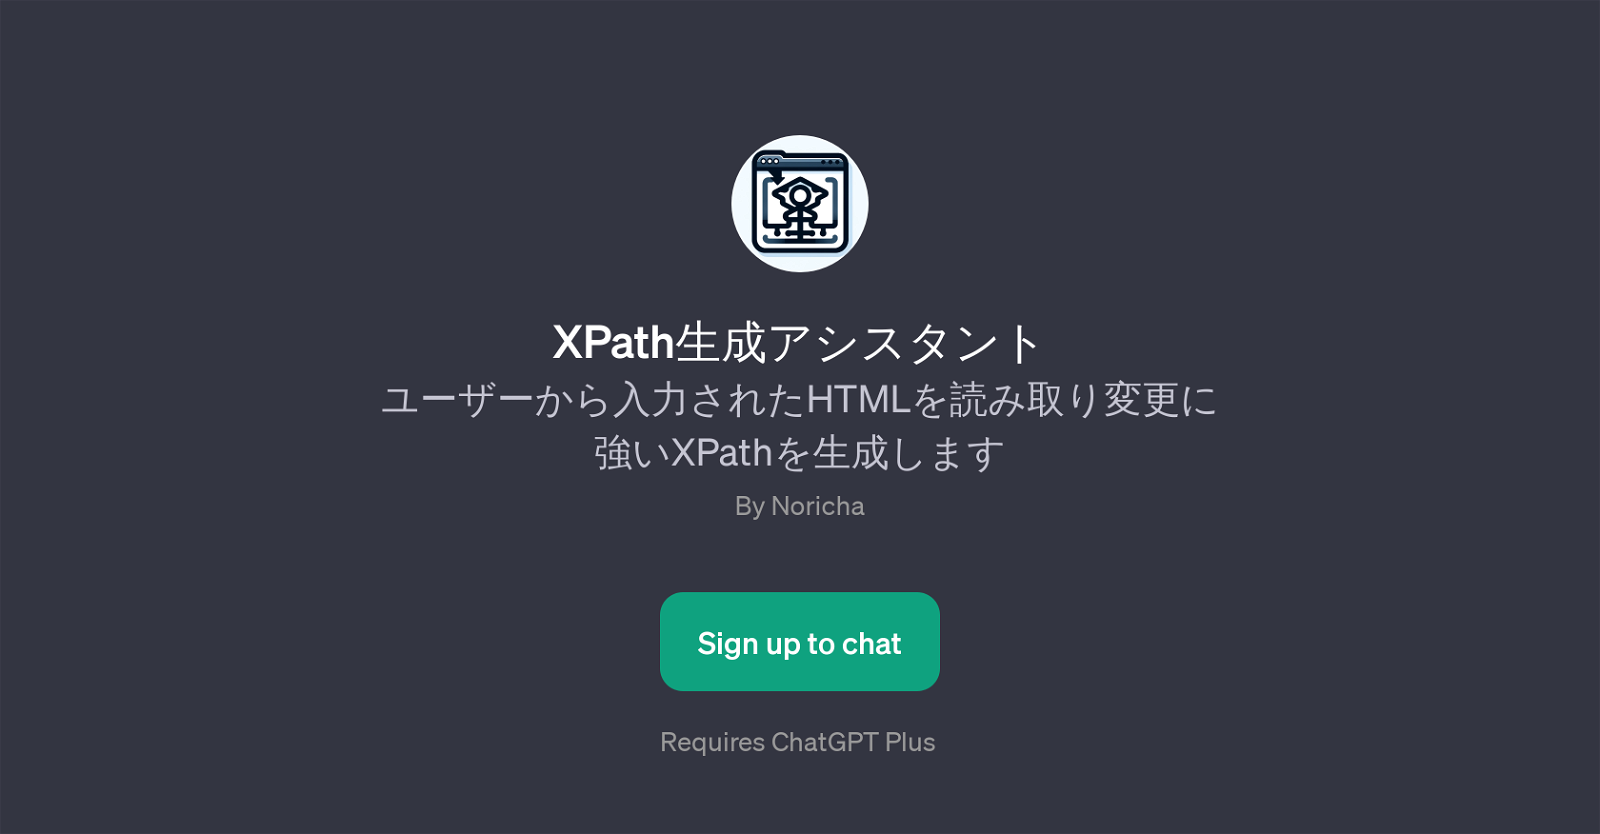 XPath website